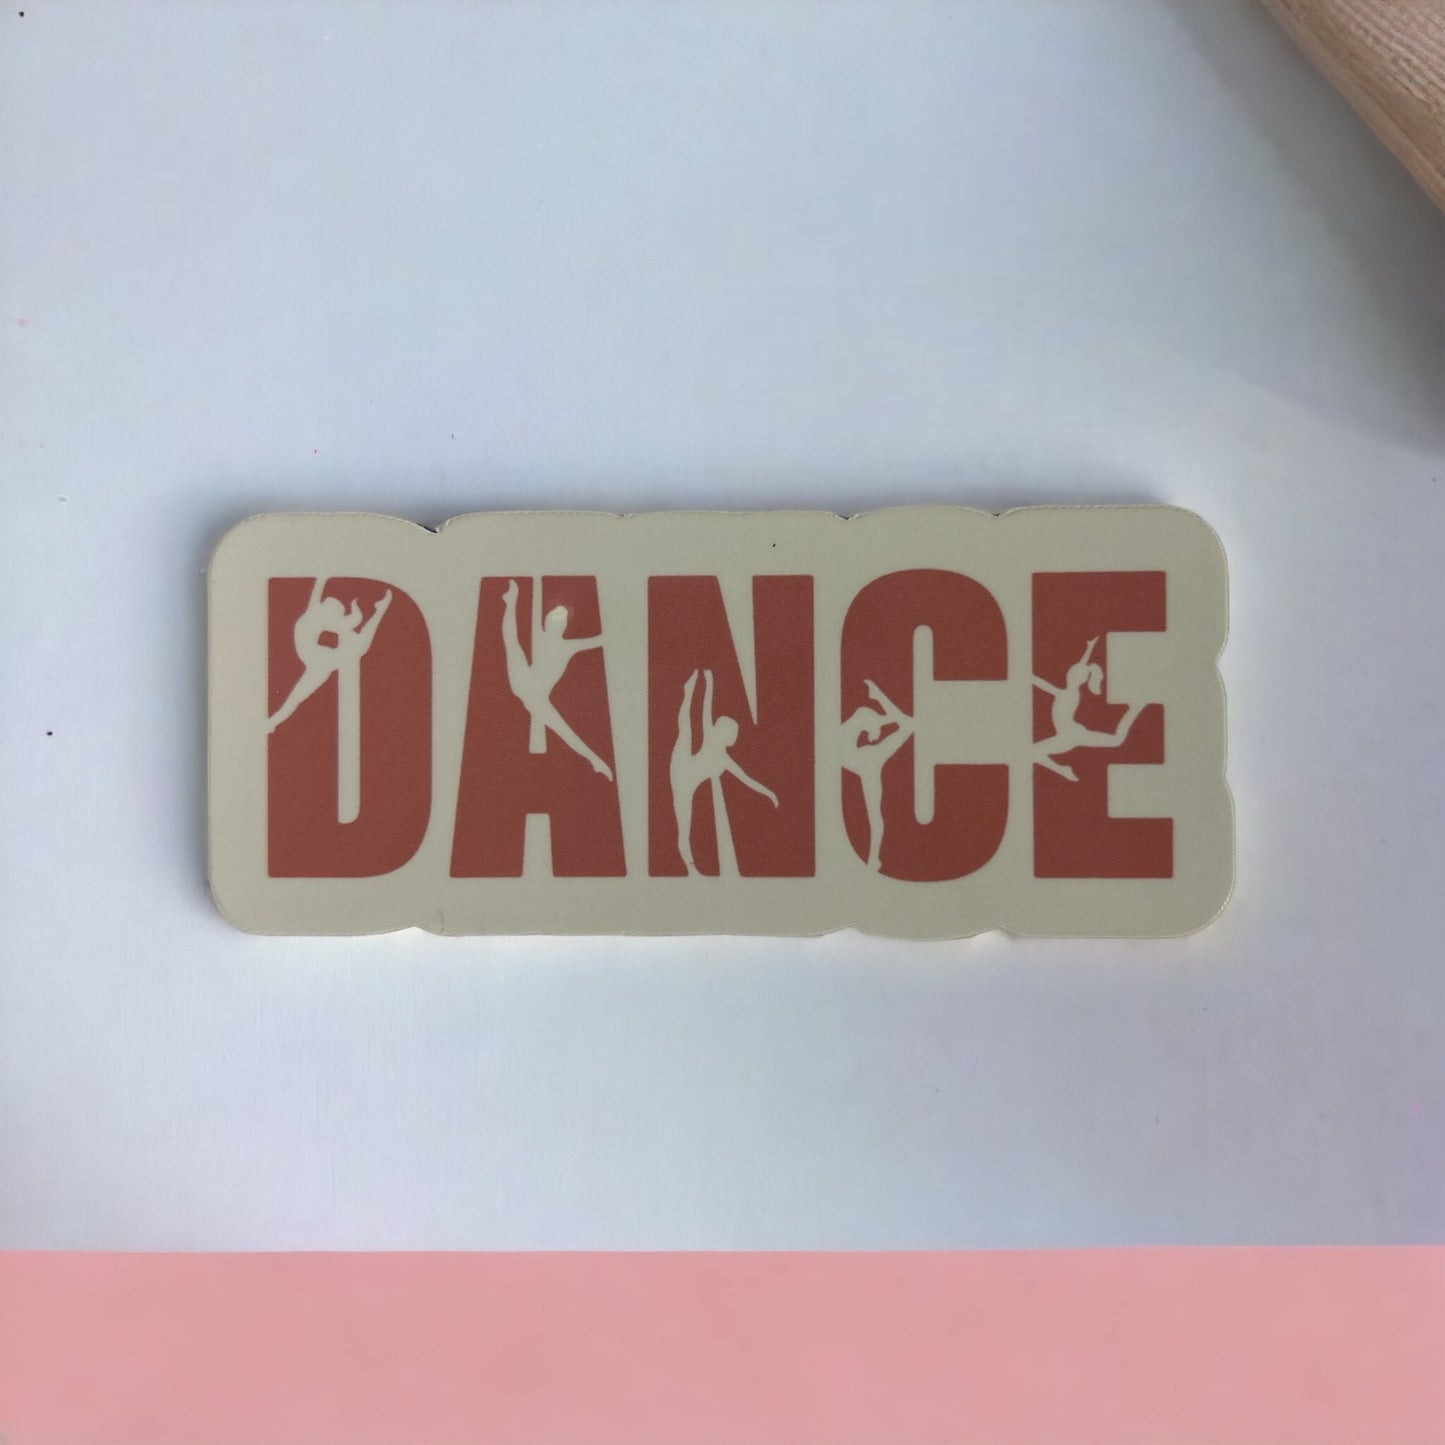 Dance sticker or Magnet